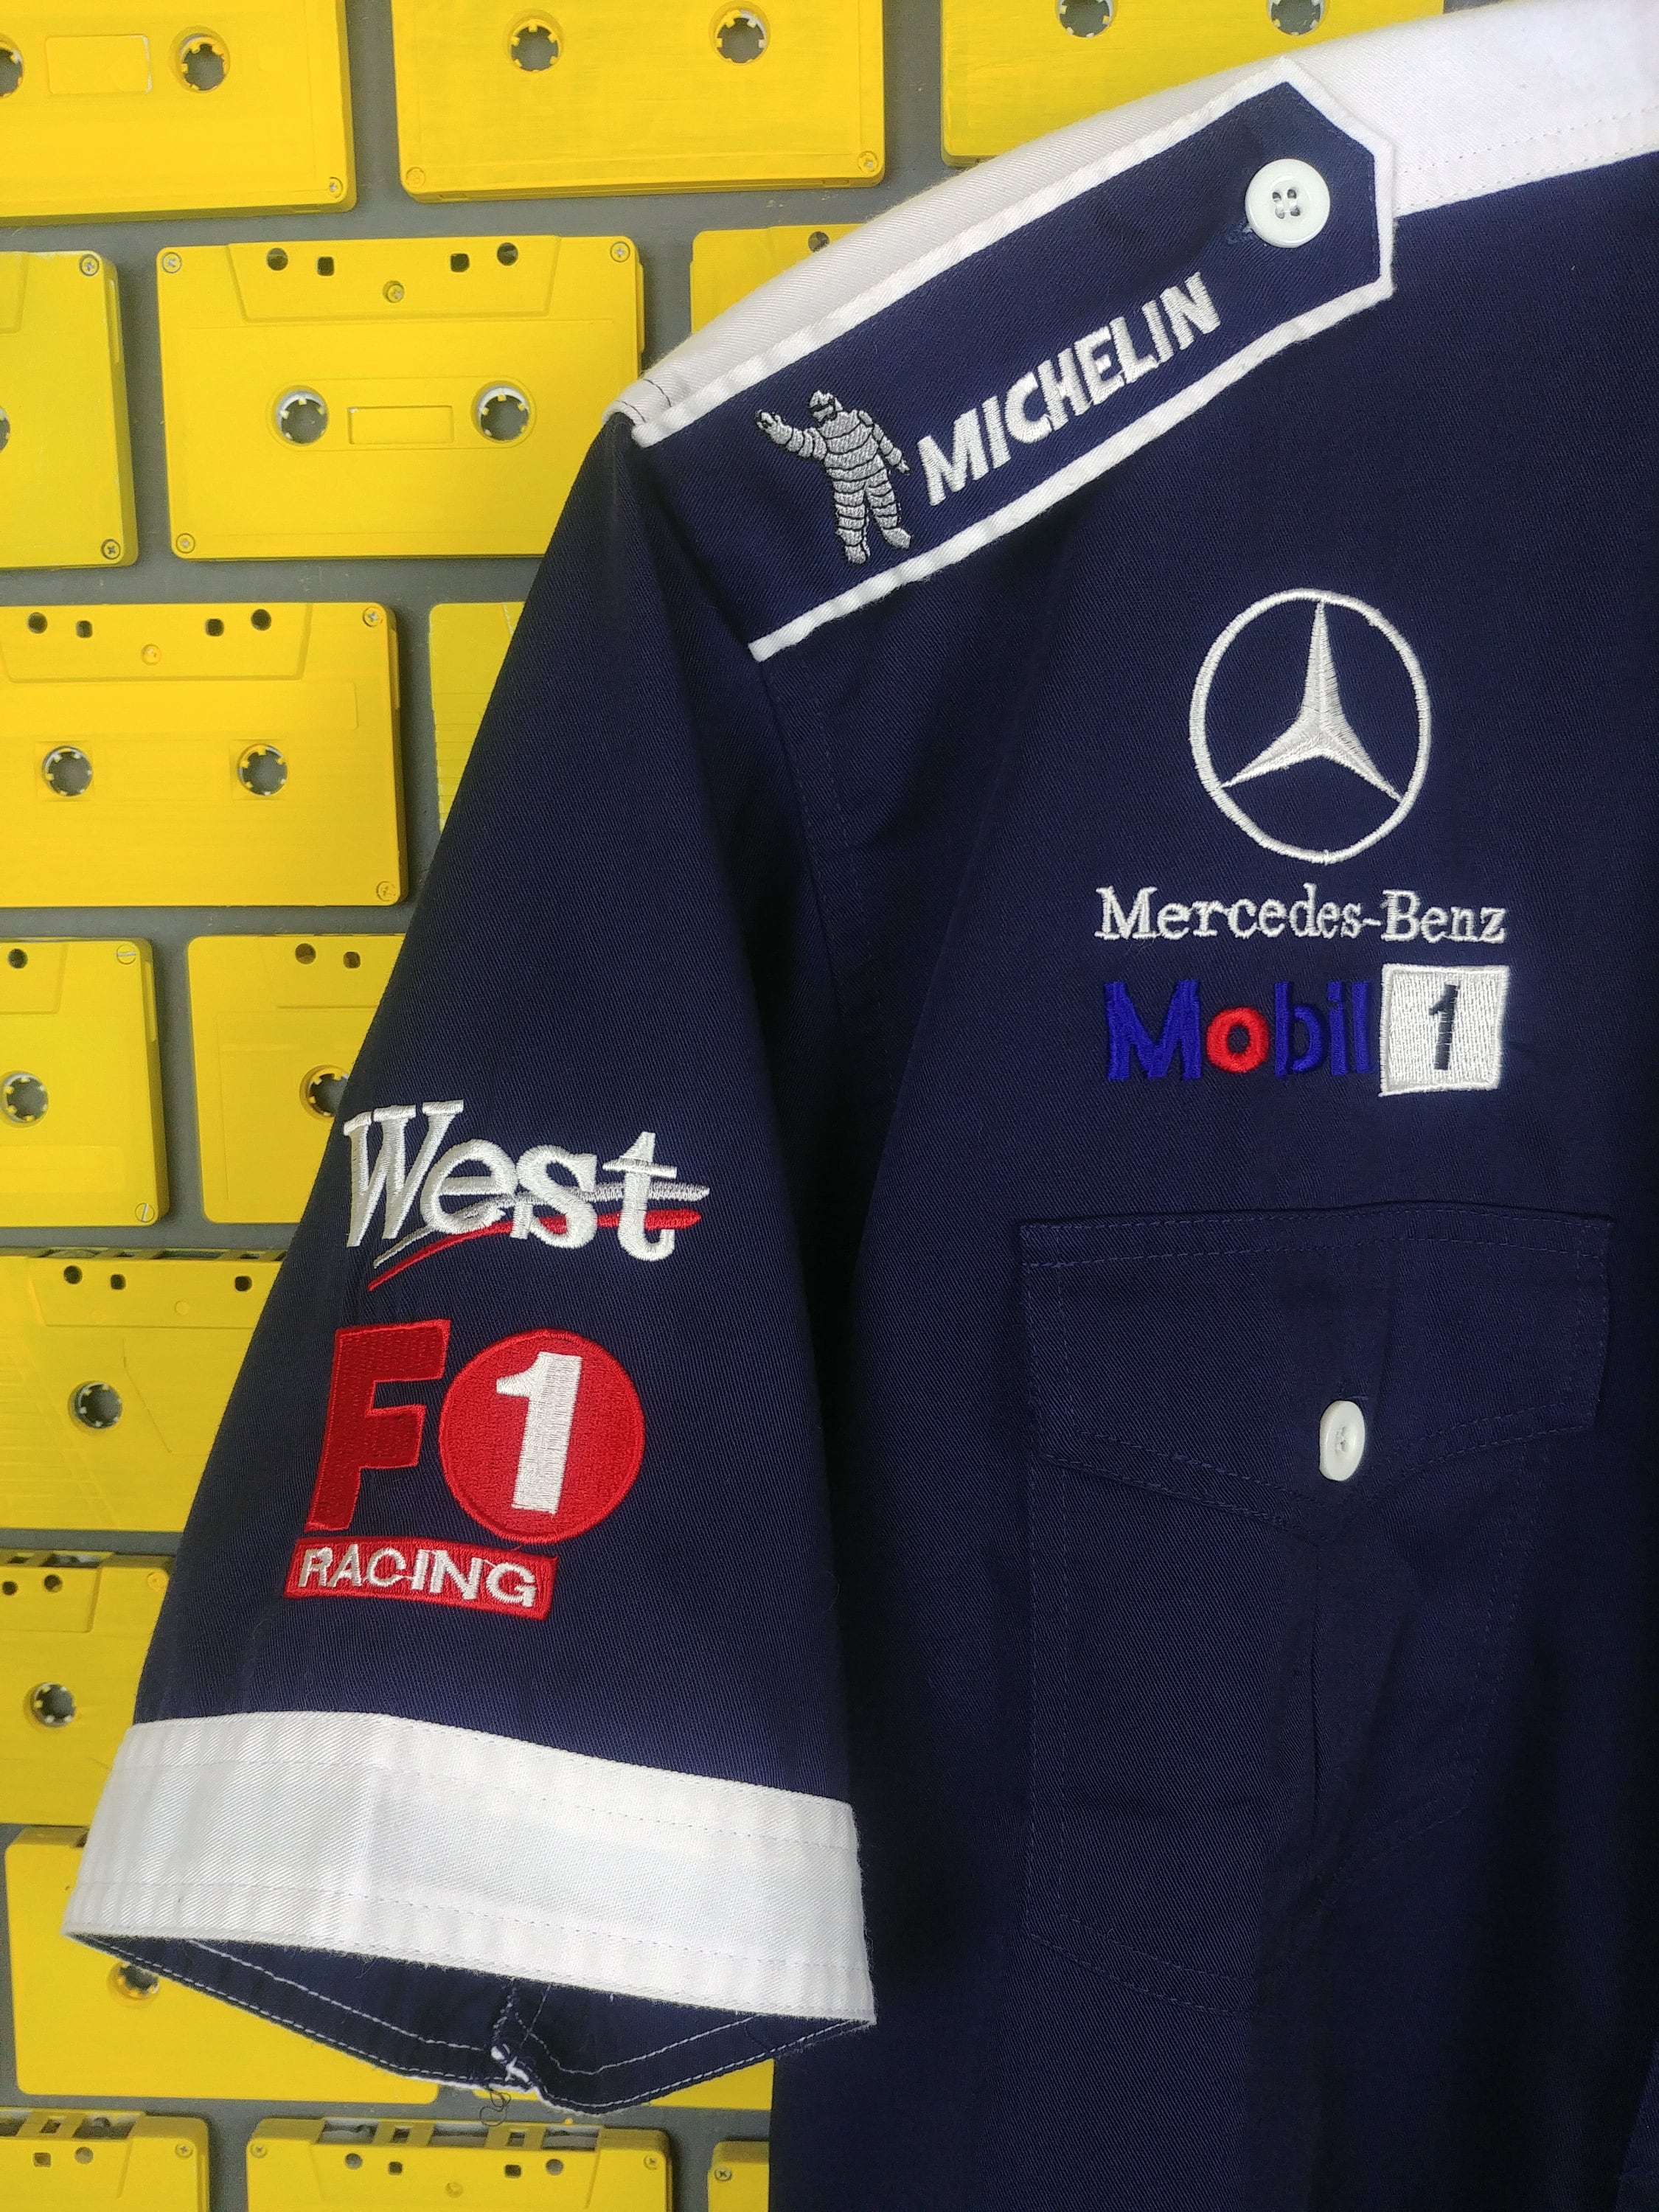 Vintage Mclaren Mercedes F1 Pit Crew Shirt Formla One Grand Prix West  Siemens Mobile Michelin Racing Team Button up Merch Shirt Size XXL - Etsy